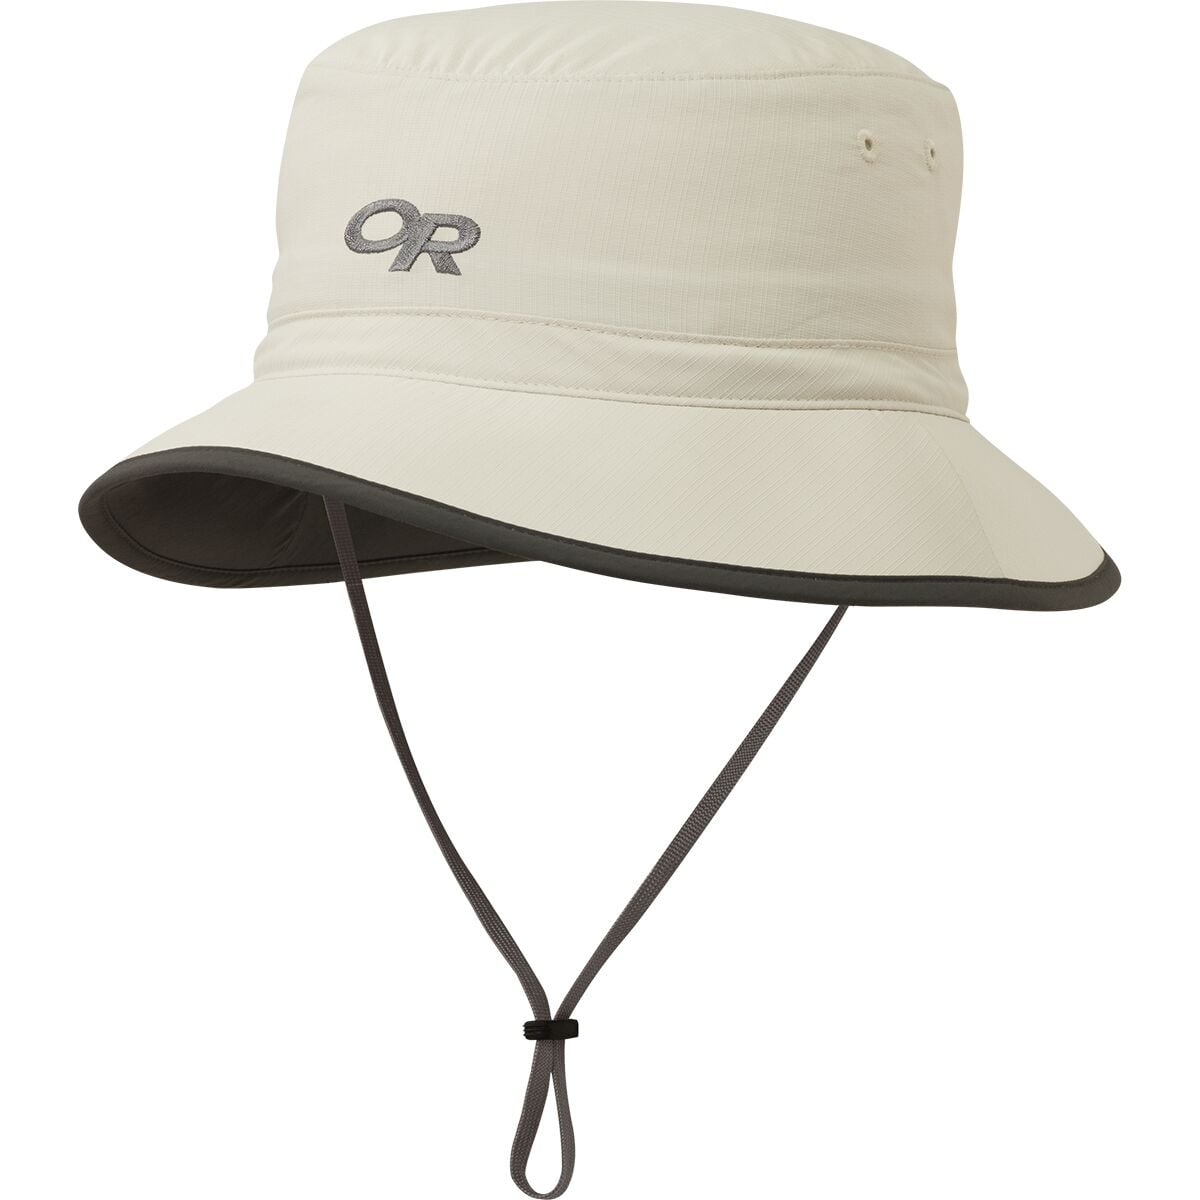 Fisherman's hat, Sunshade hat, Leisure Travel Hiking hat, Men and Women